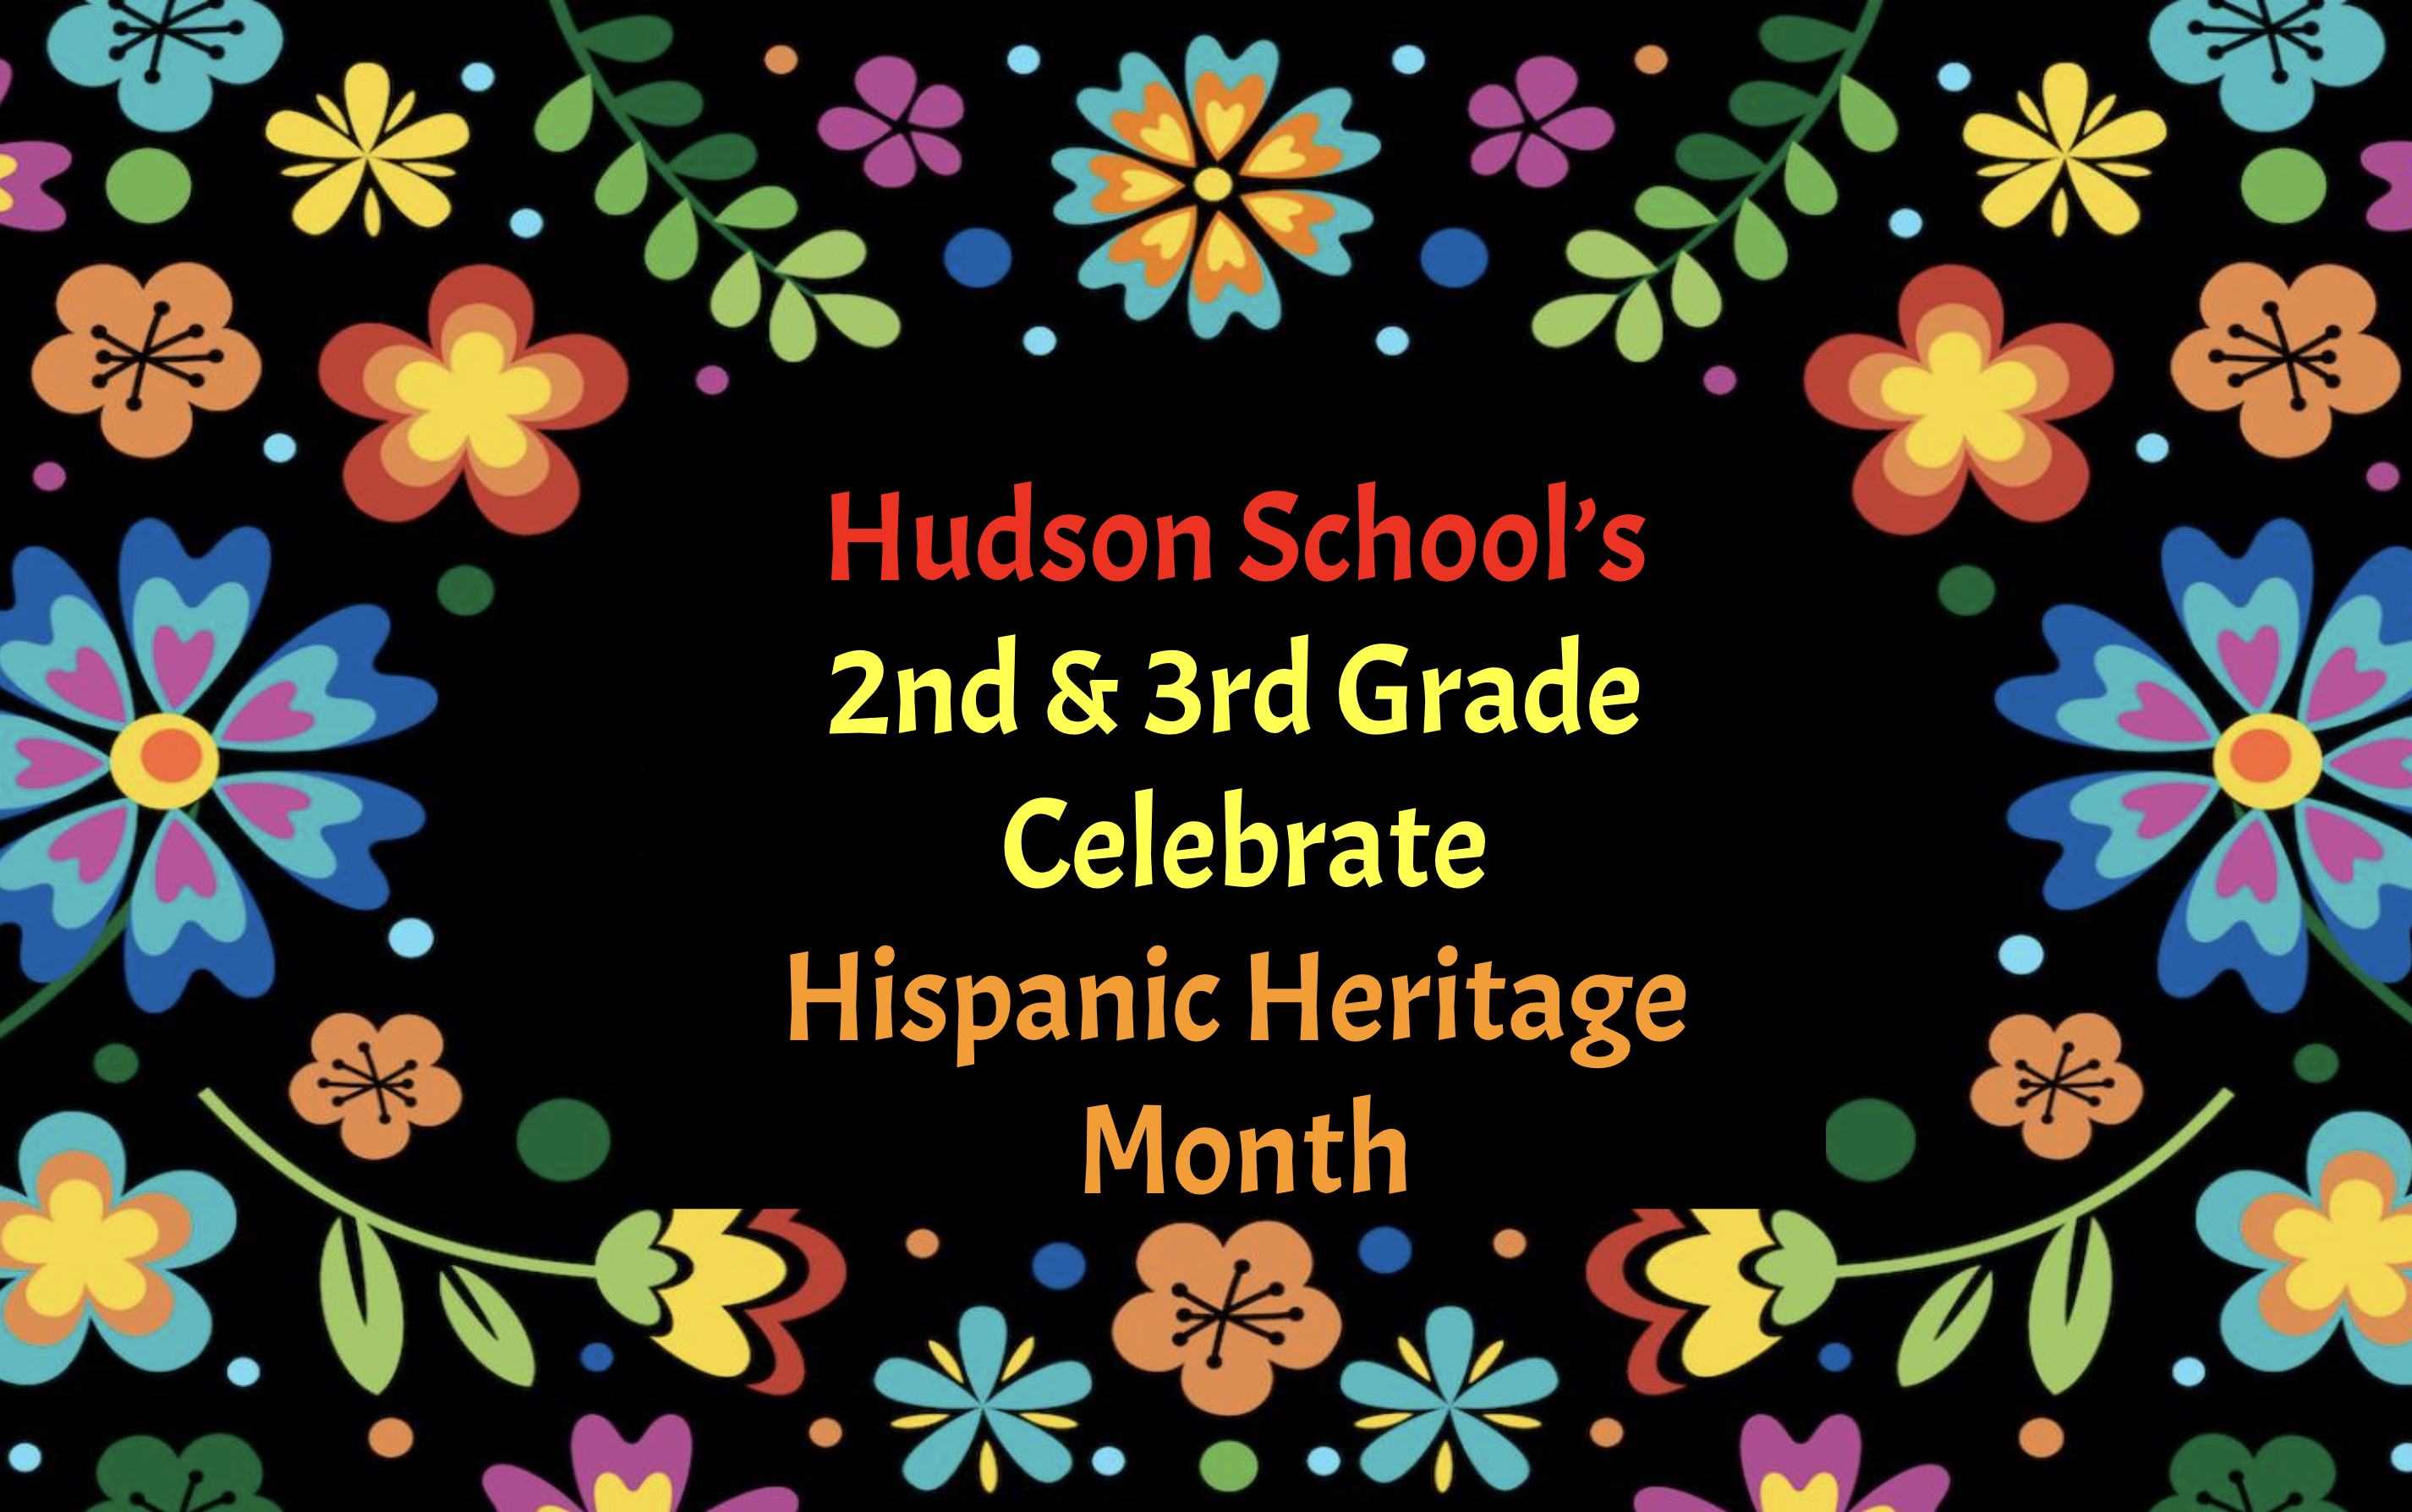 Celebrating Hispanic Heritage Month at the Hudson School